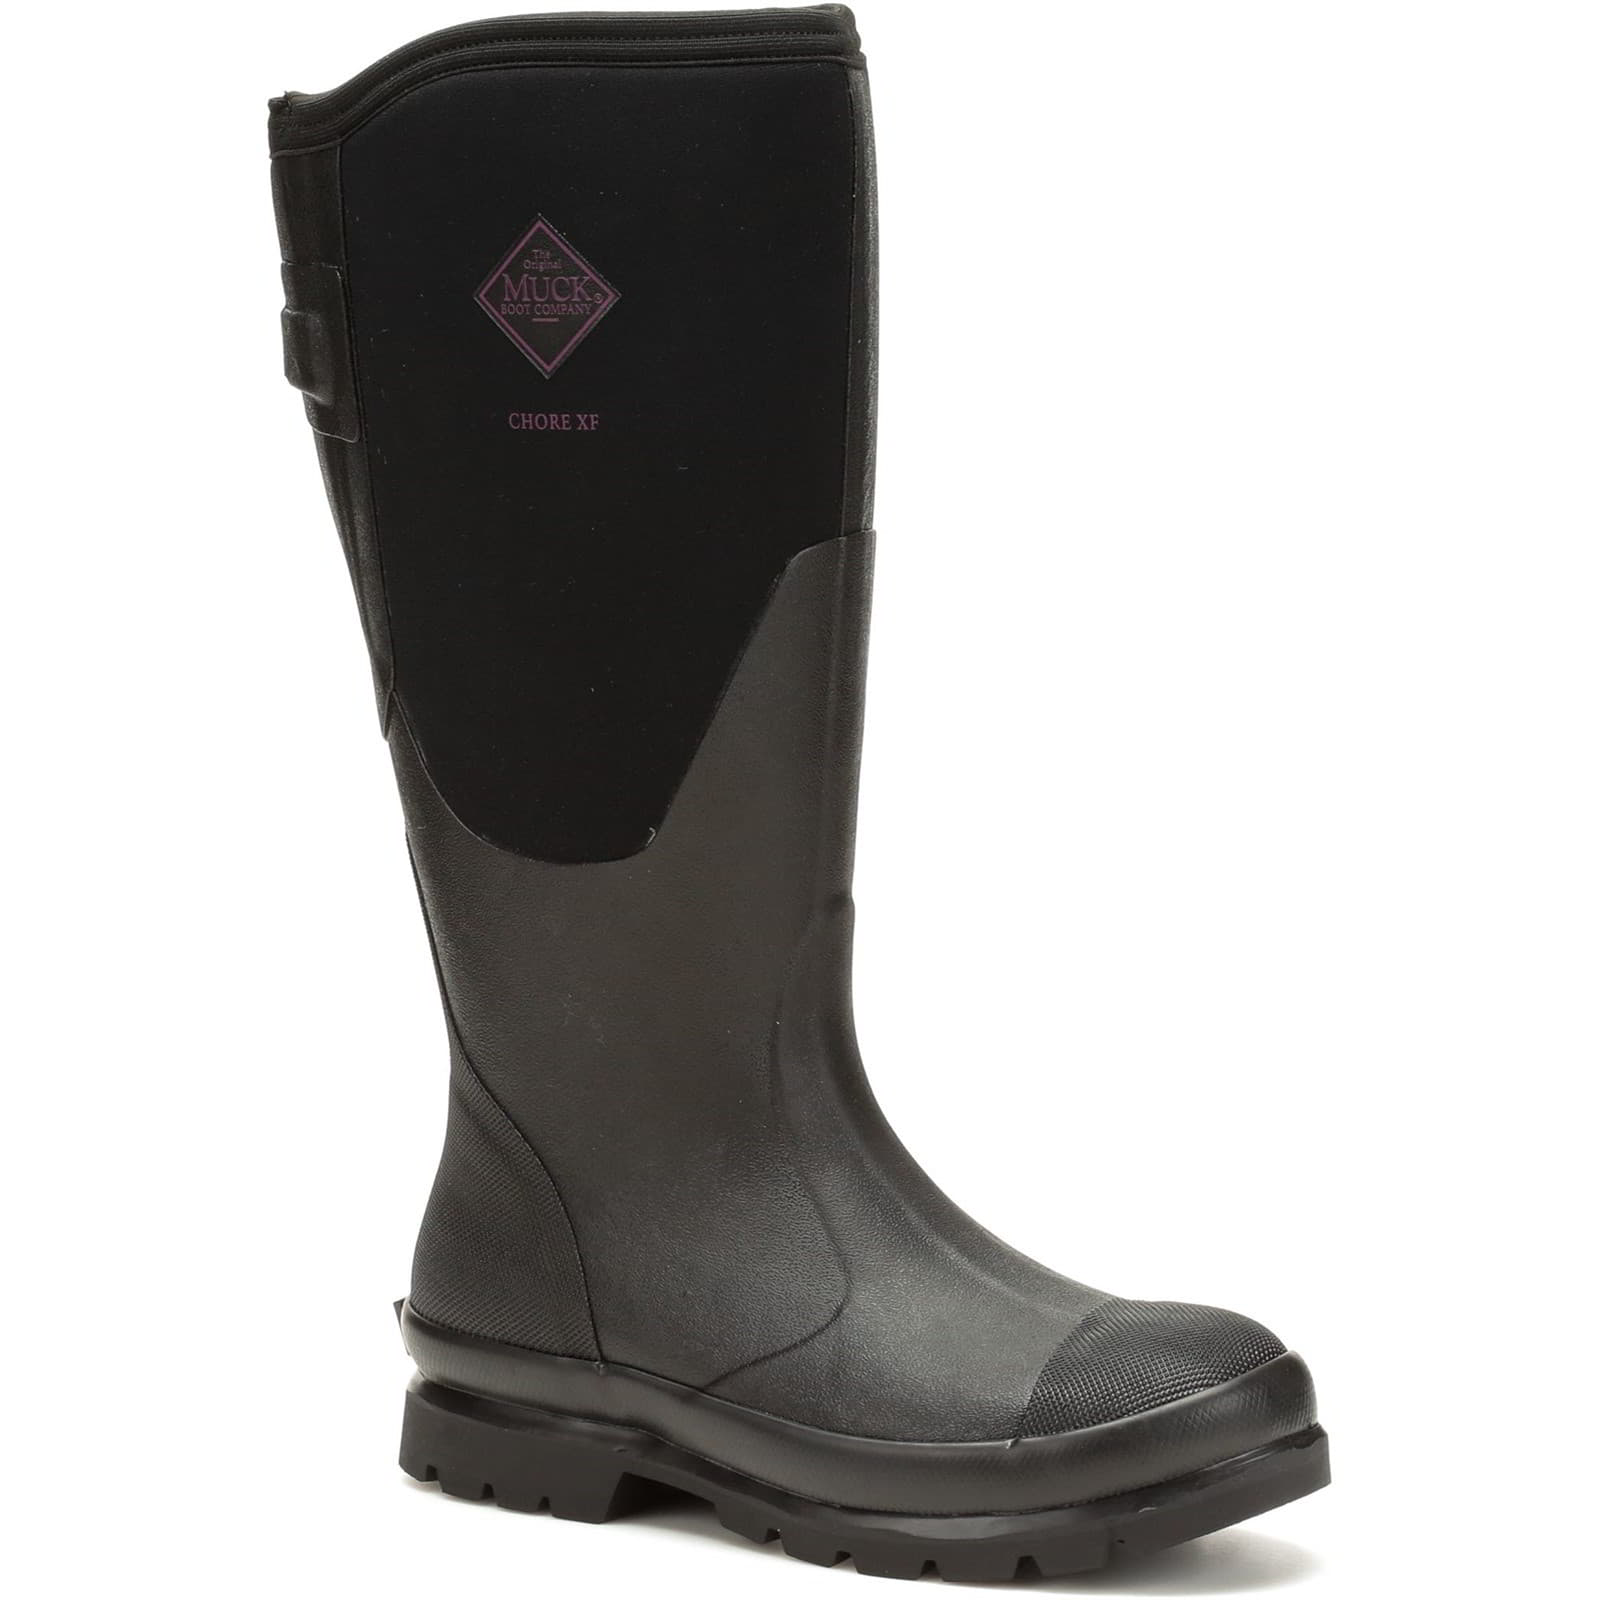 Muck Boots Women's Chore Adjustable Tall Neoprene Wellington Boots Wellies - UK 4